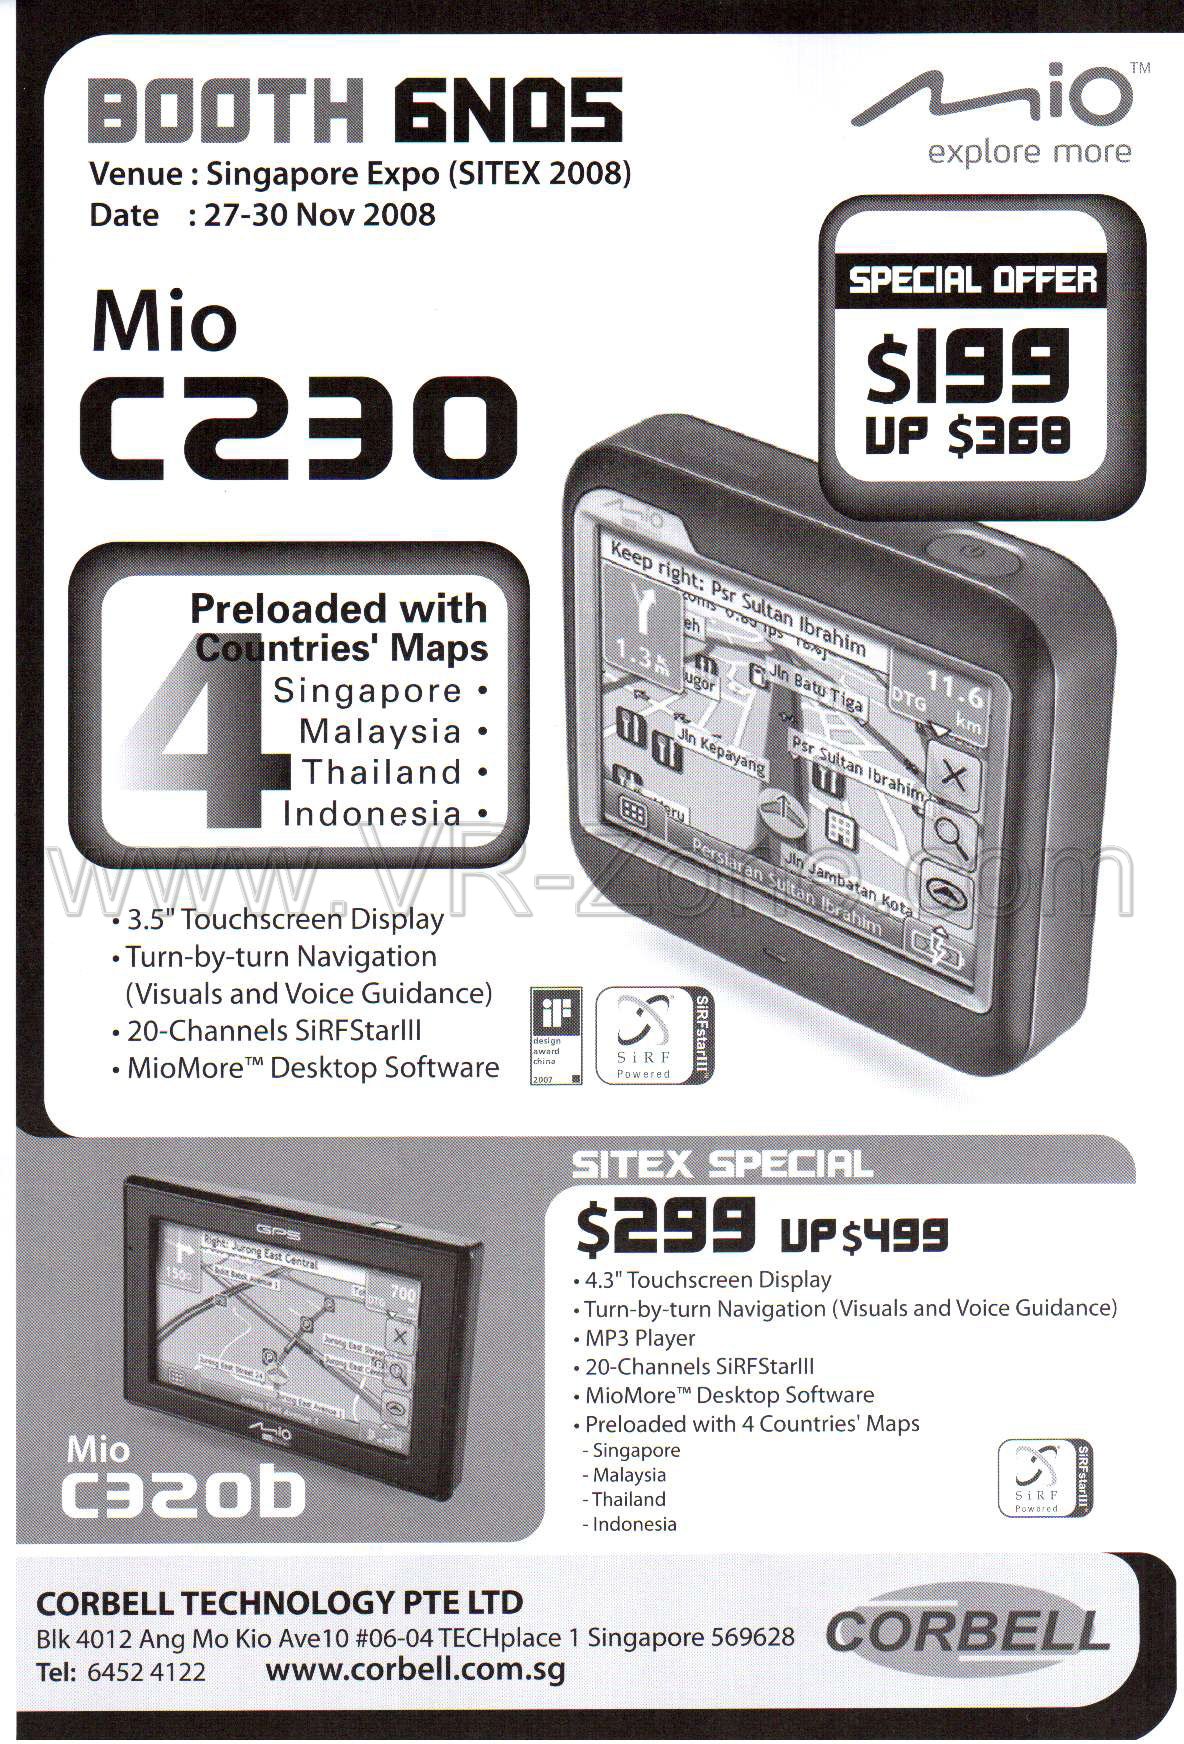 Sitex 2008 price list image brochure of Mio Corbell